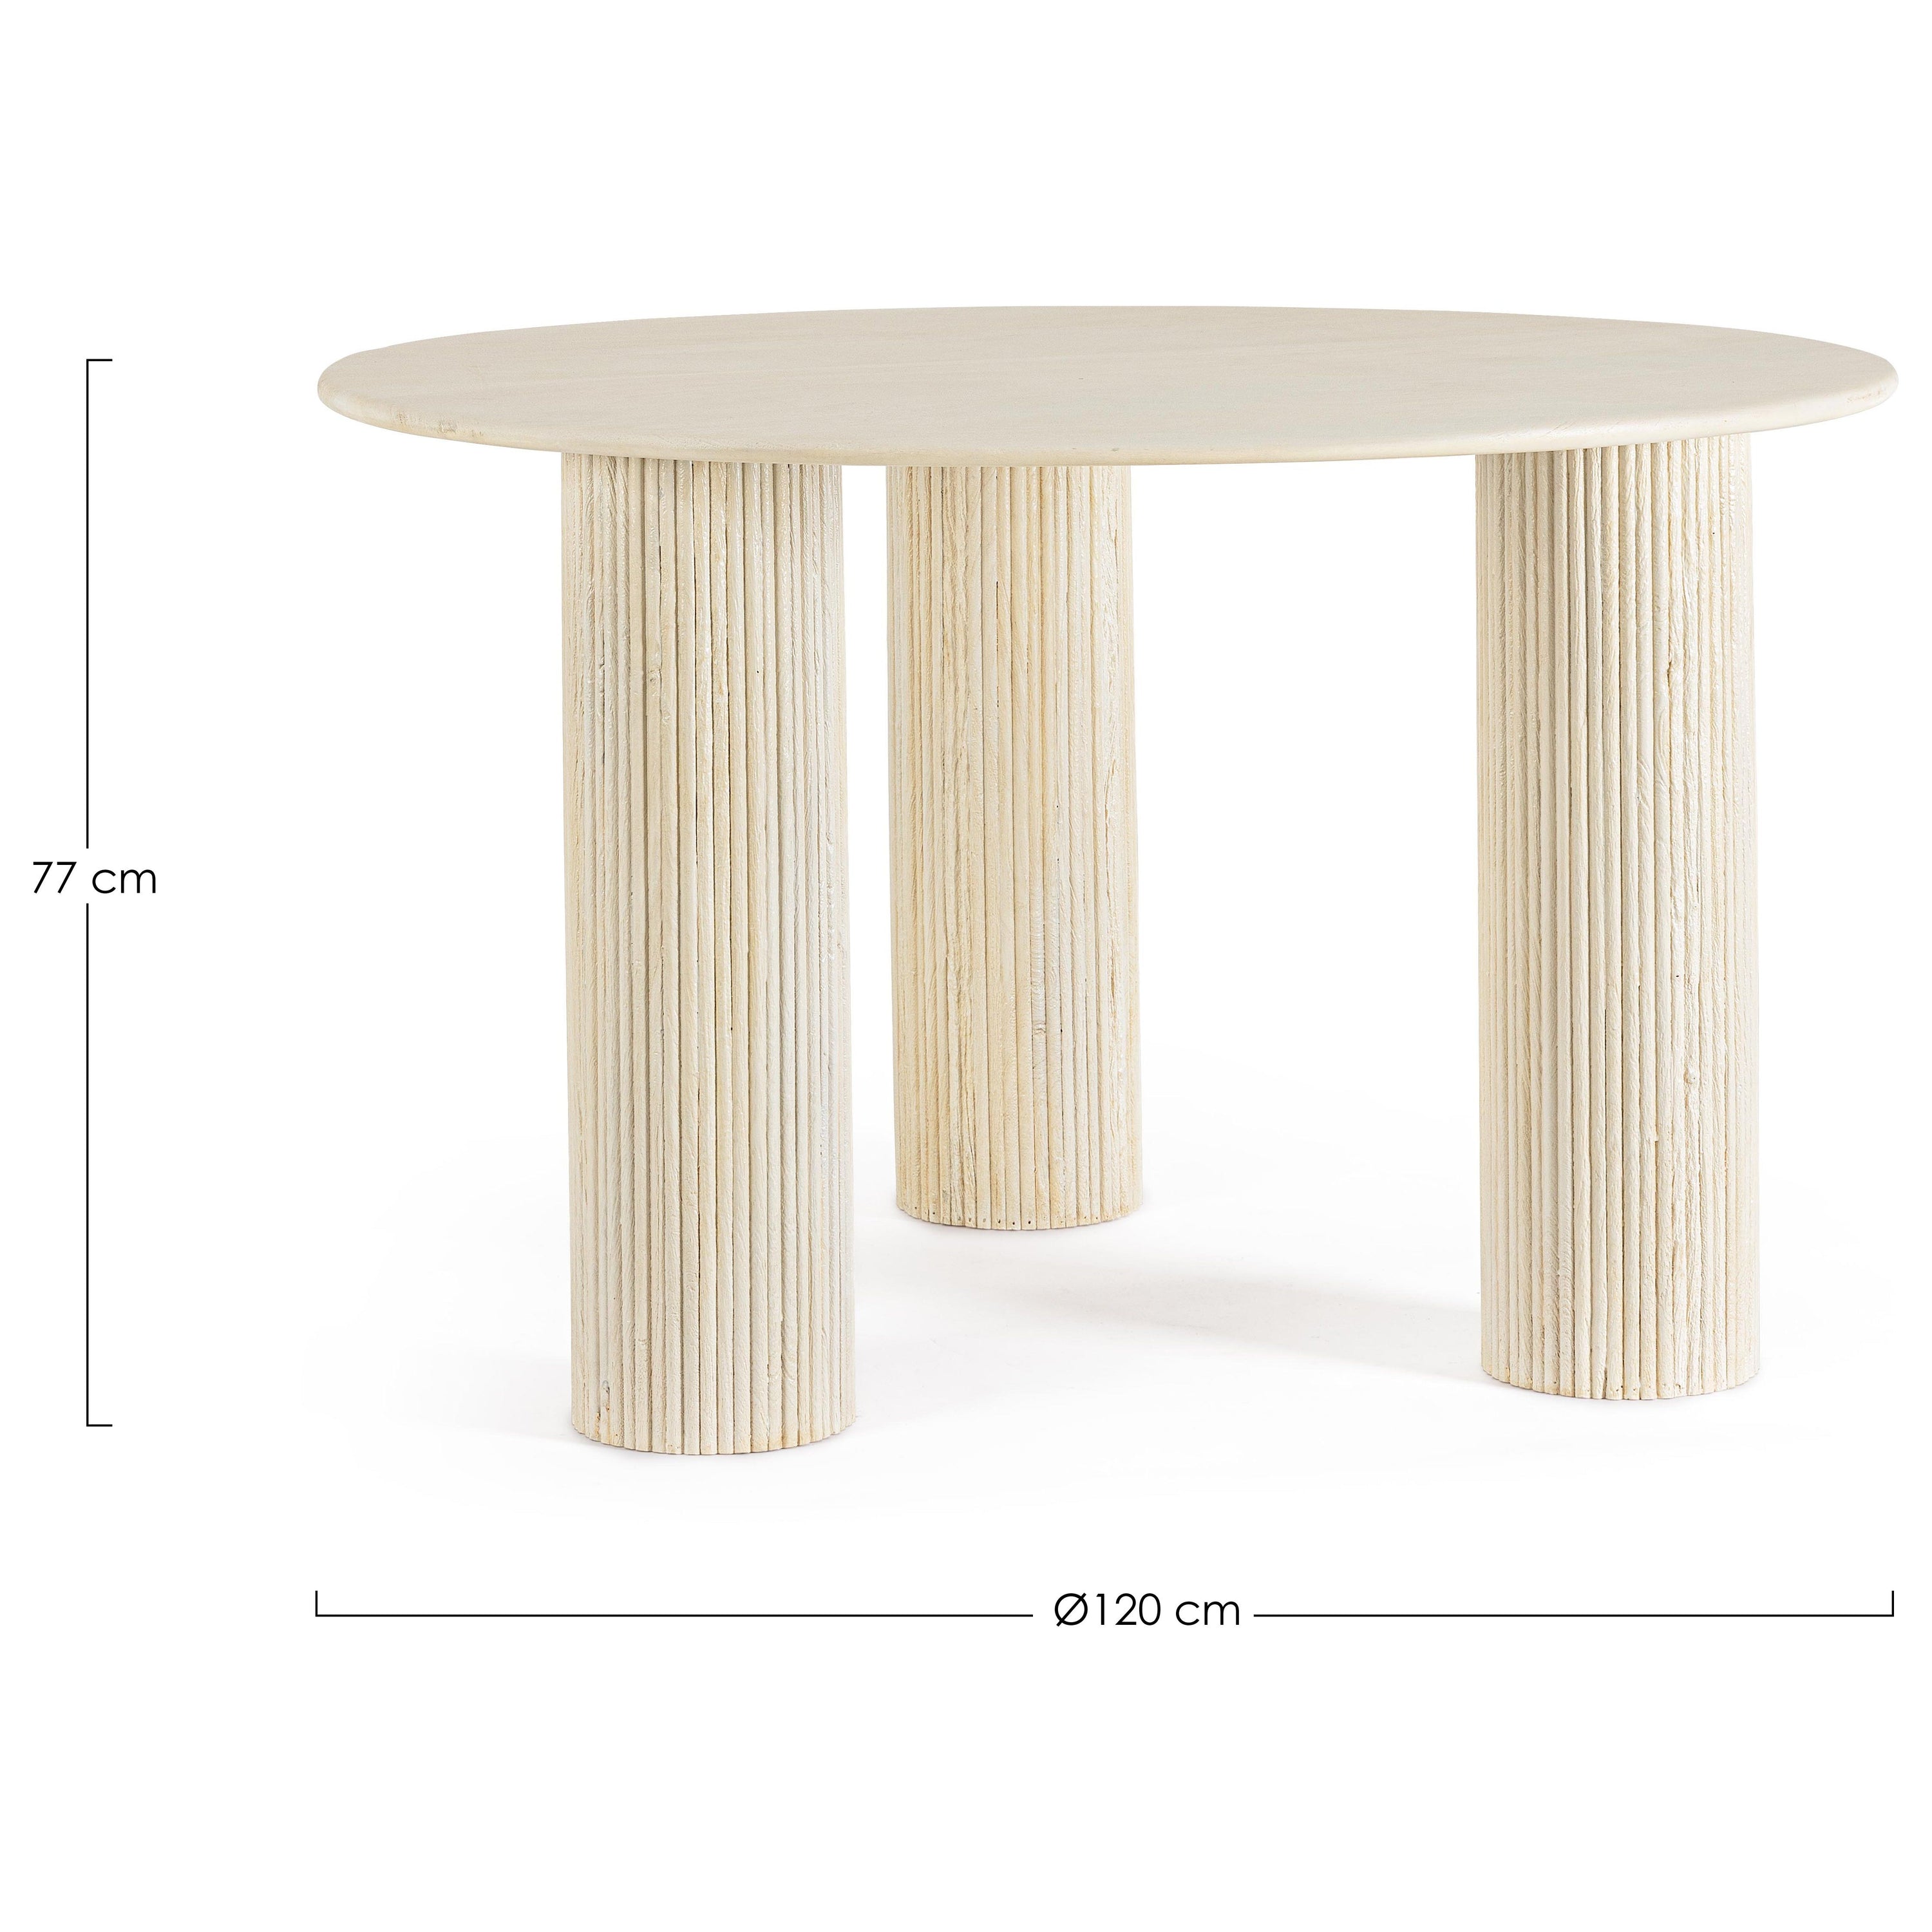 DACCA apvalus valgomojo stalas, mango mediena, natūrali spalva, Ø120cm